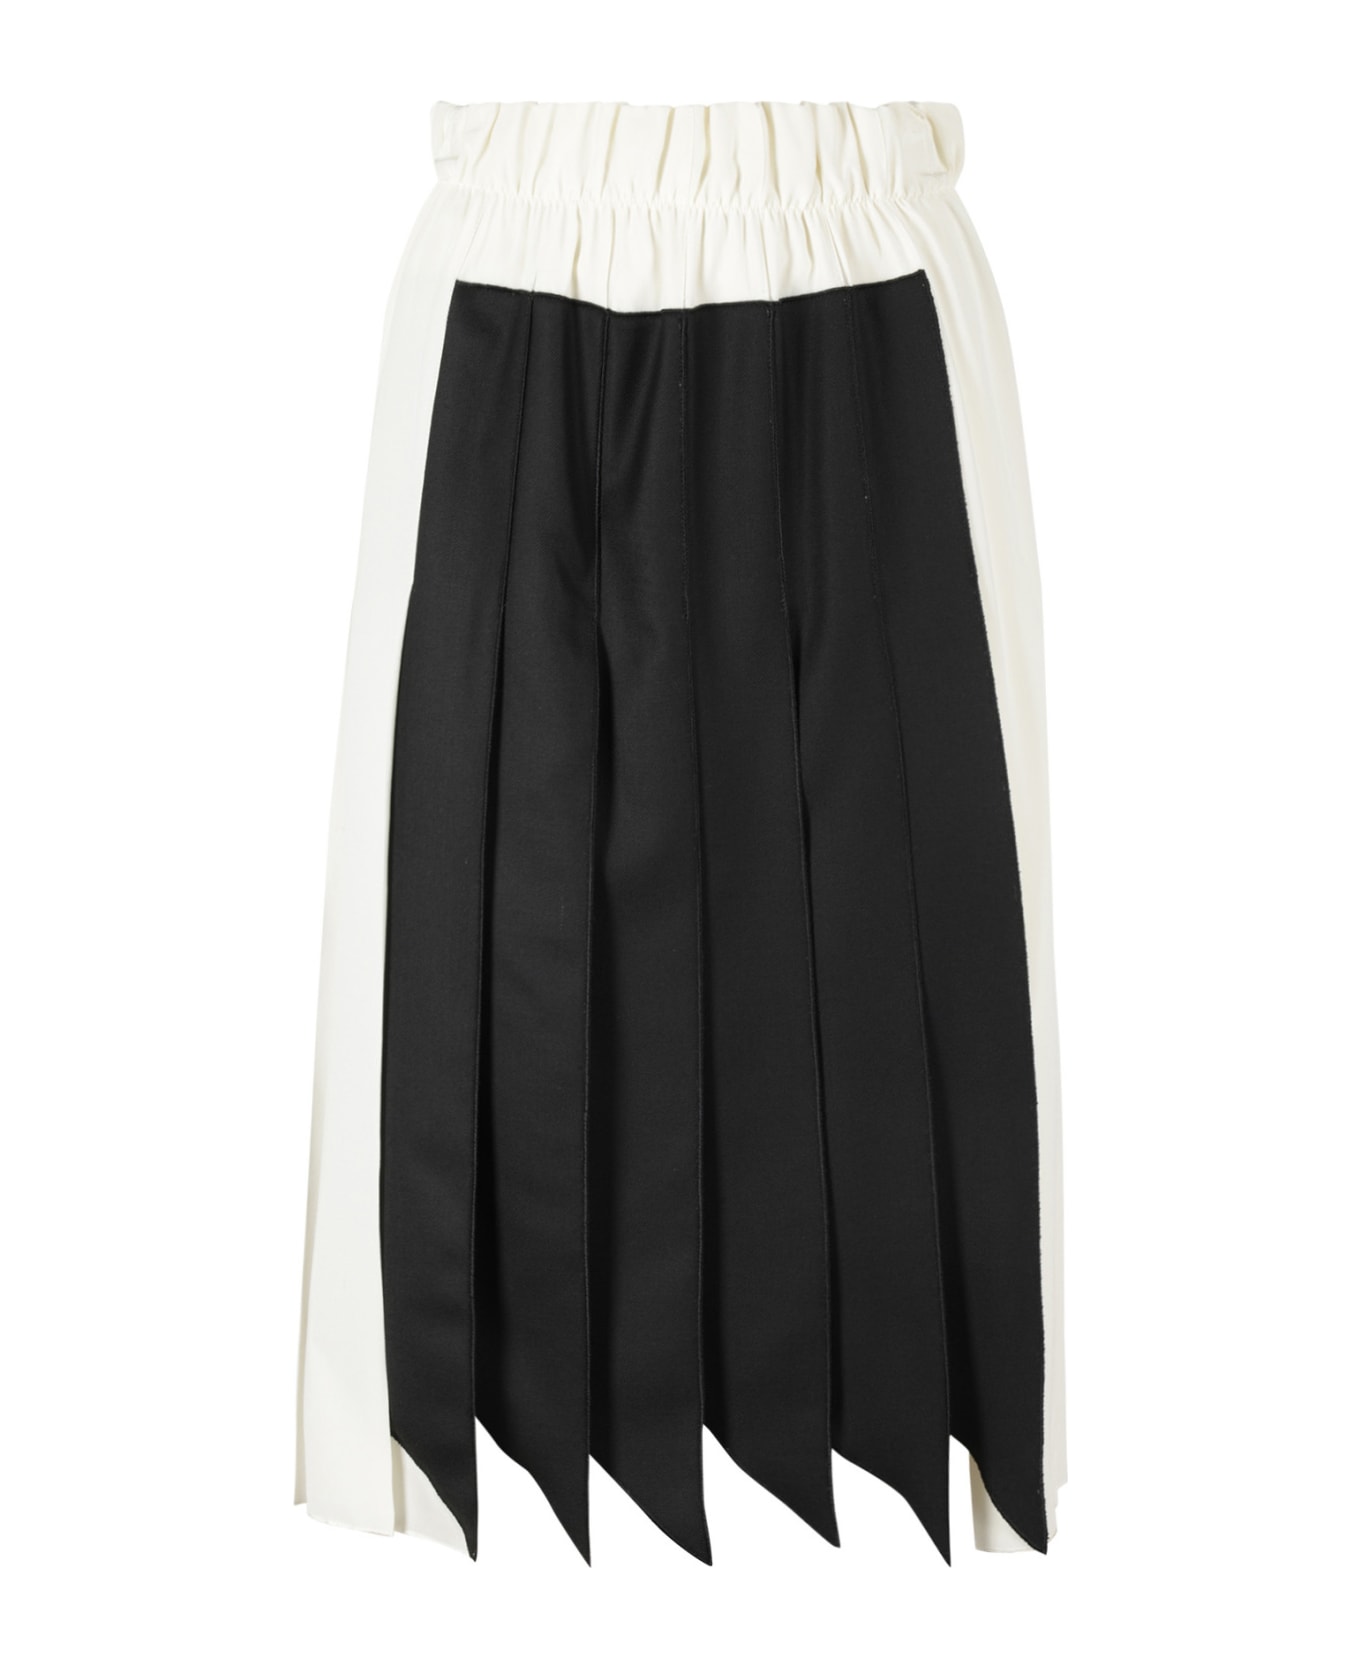 Victoria Beckham Pleated Panel Detail Skirt スカート